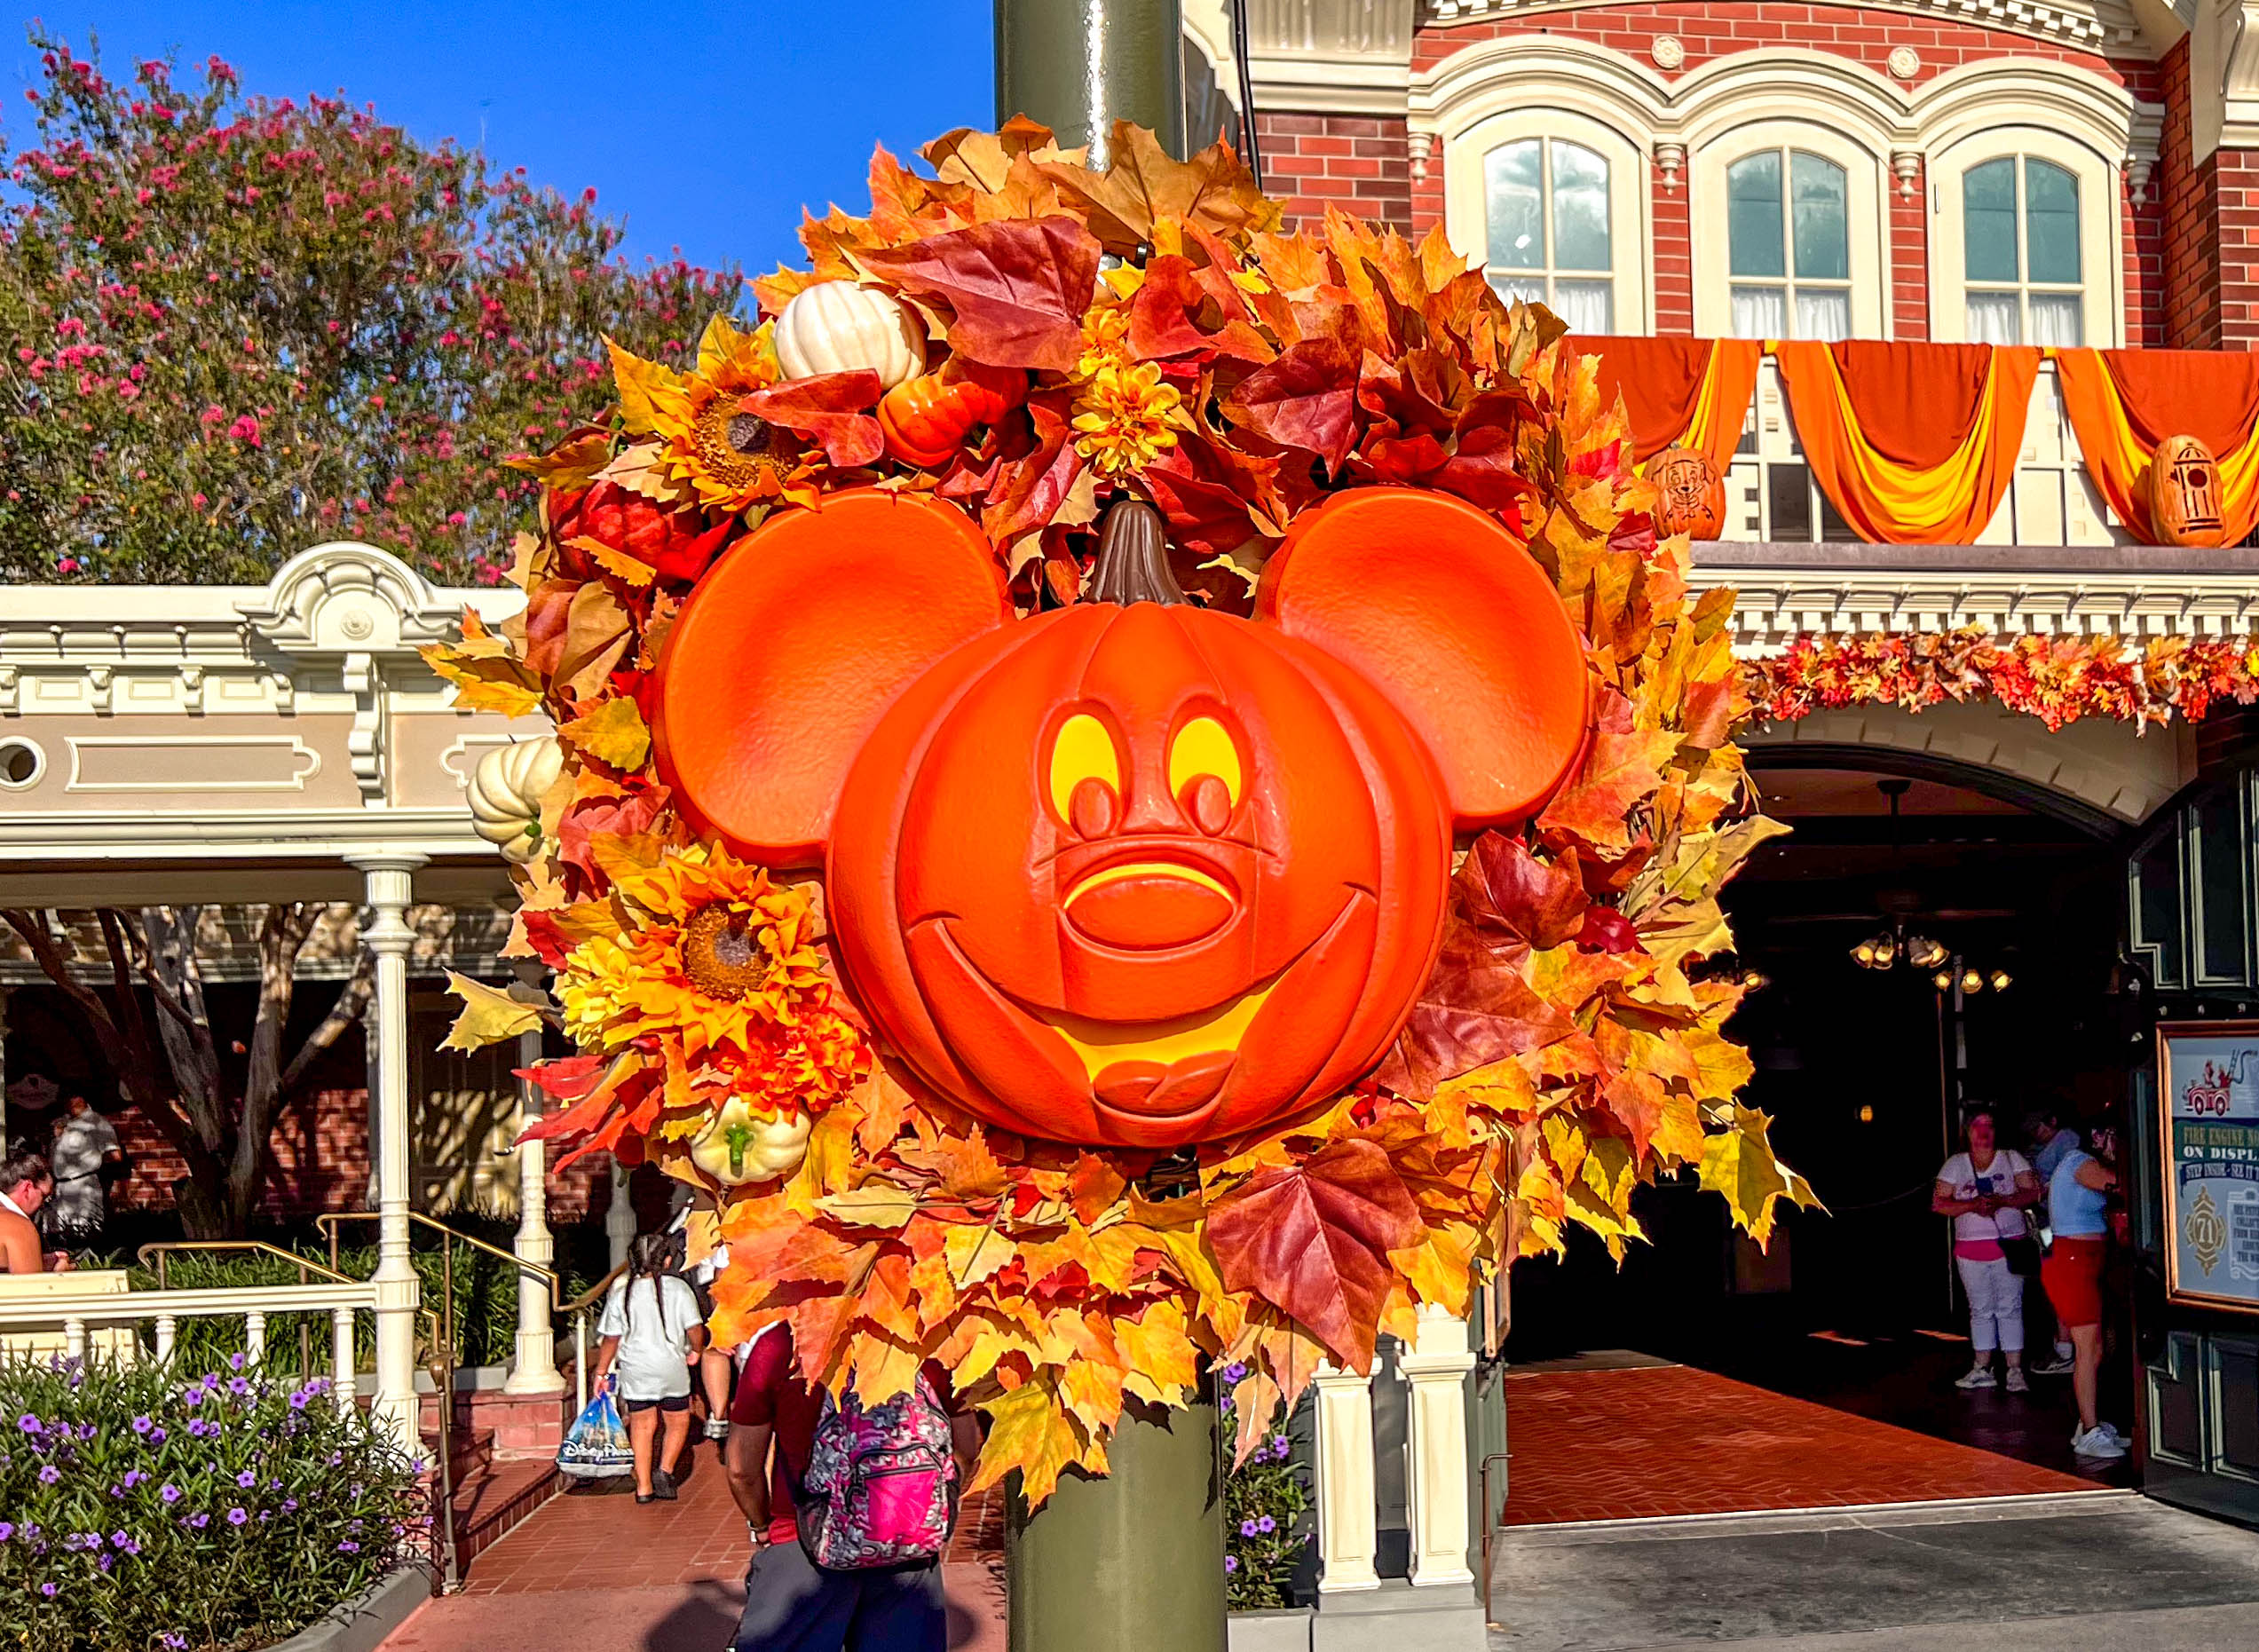 Mickey Pumpkin Wreath